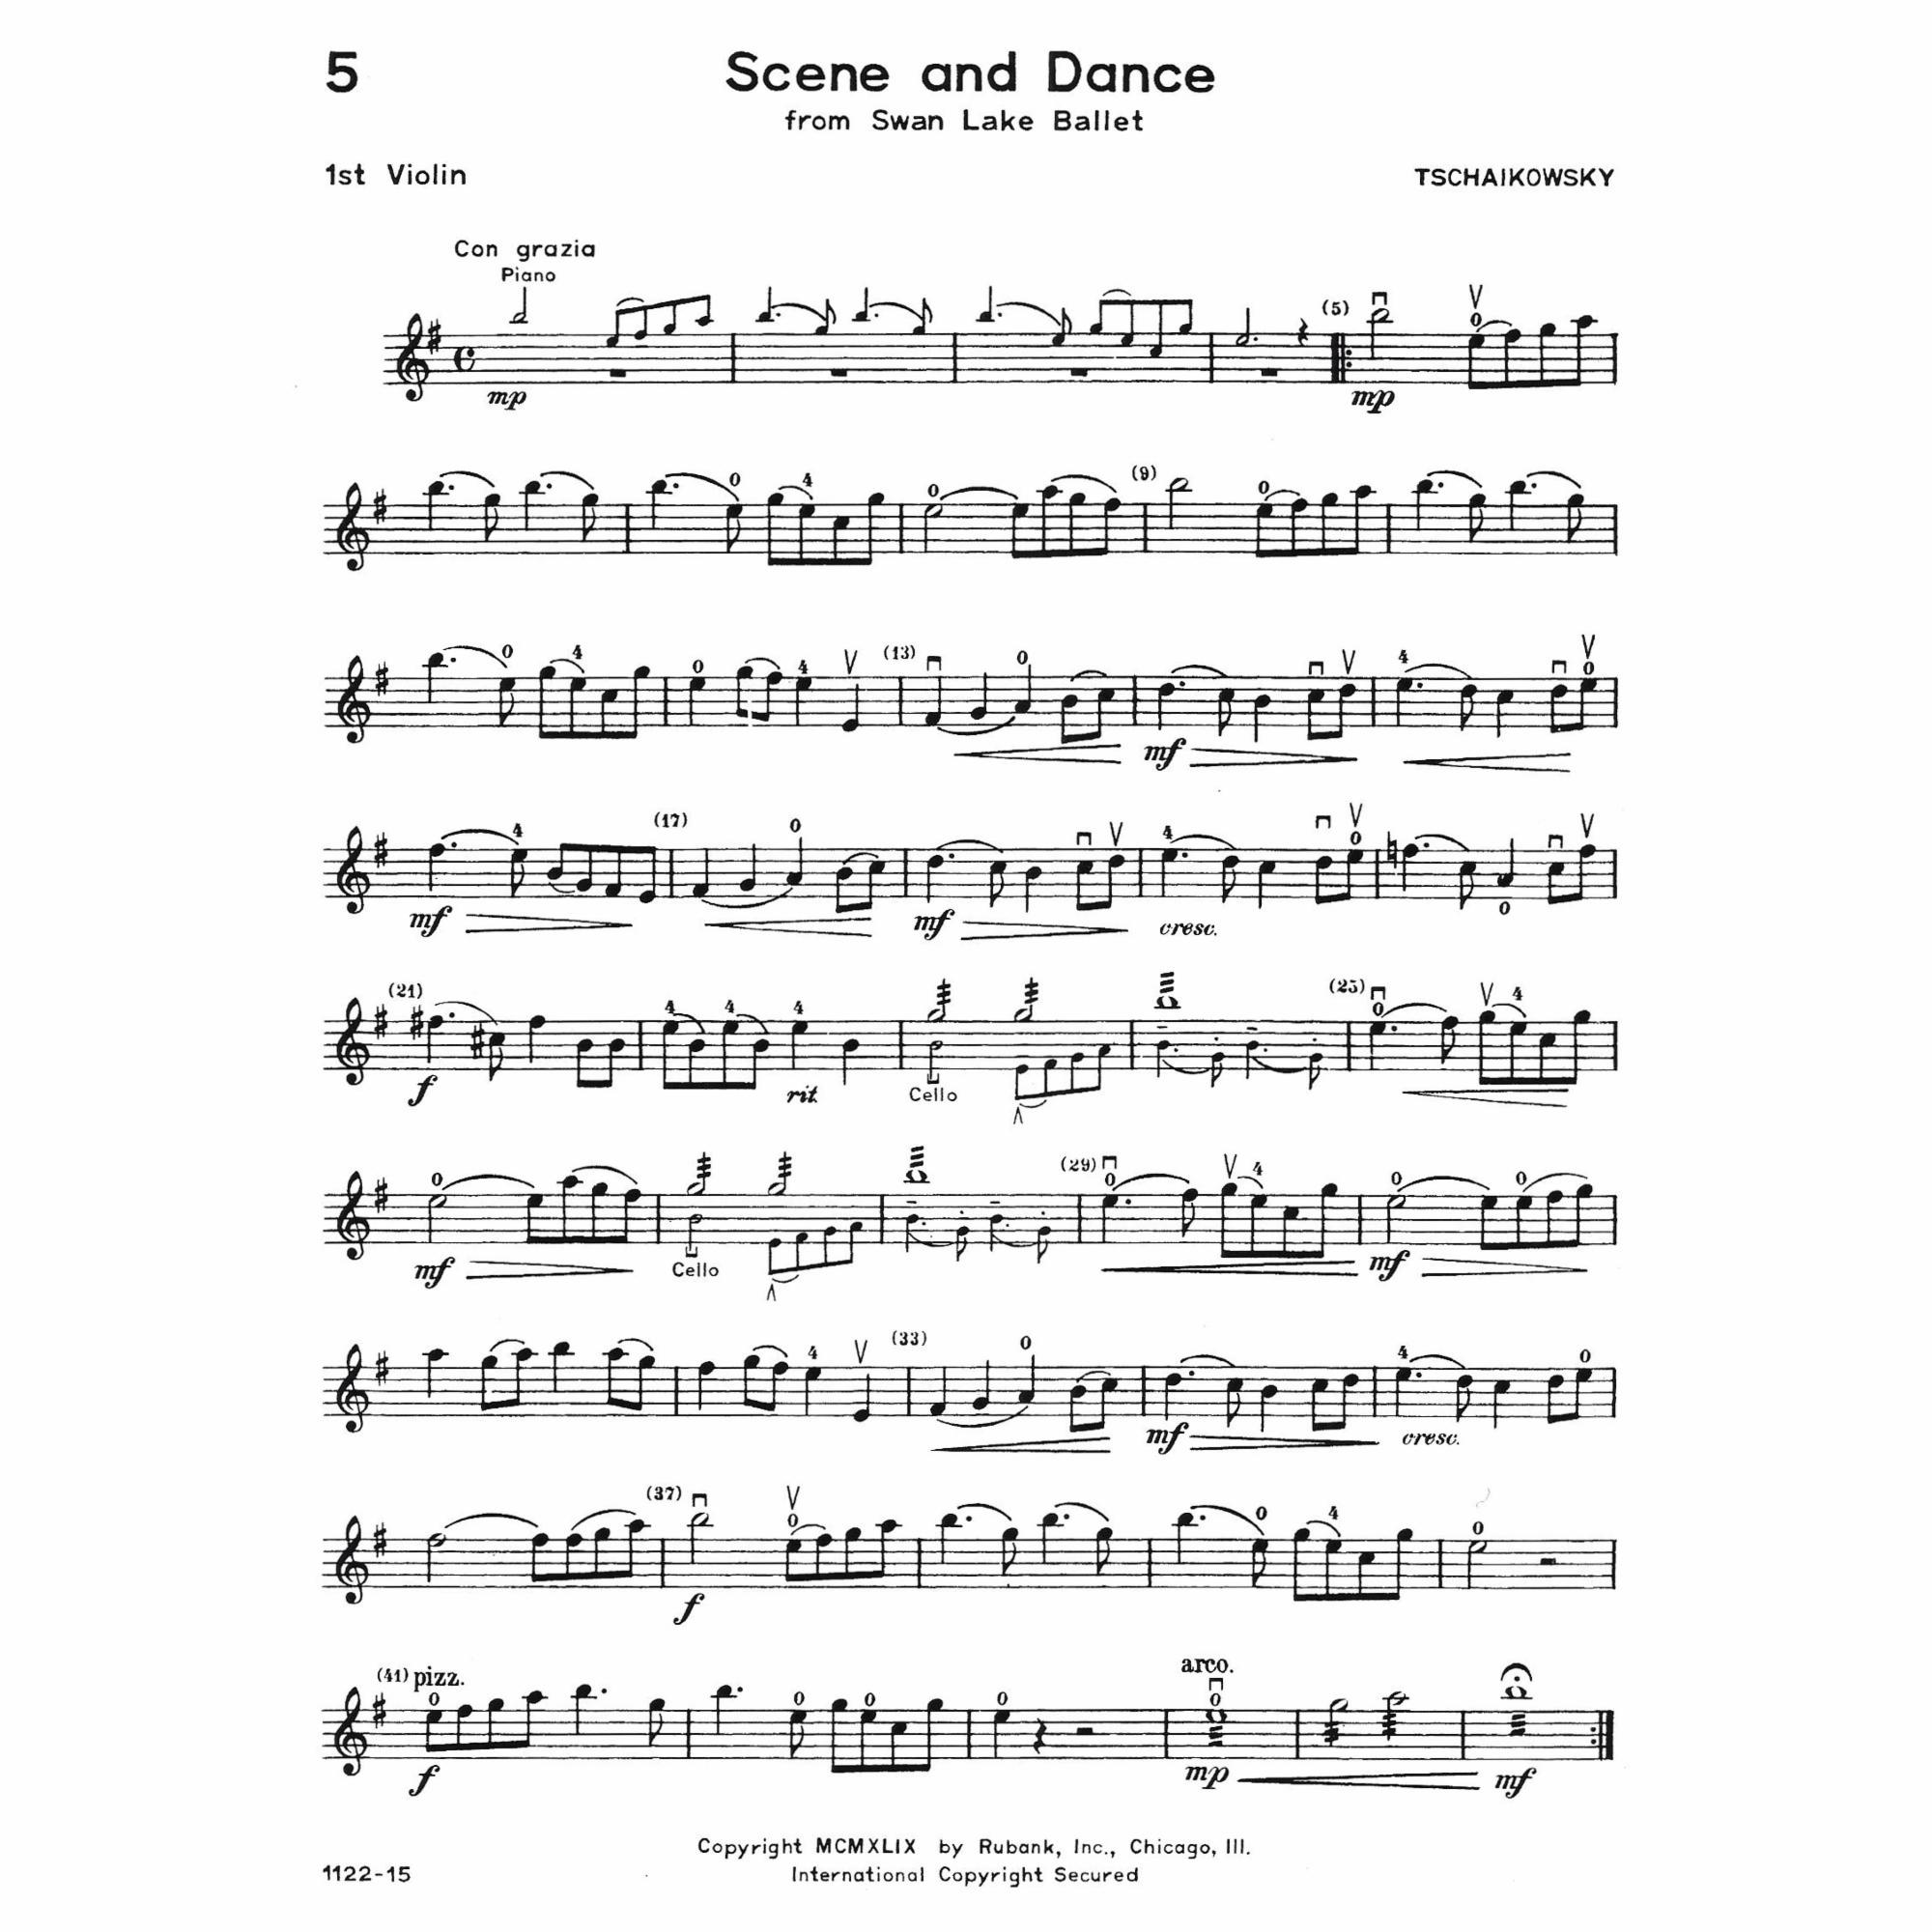 Sample: First Violin (Pg. 5)